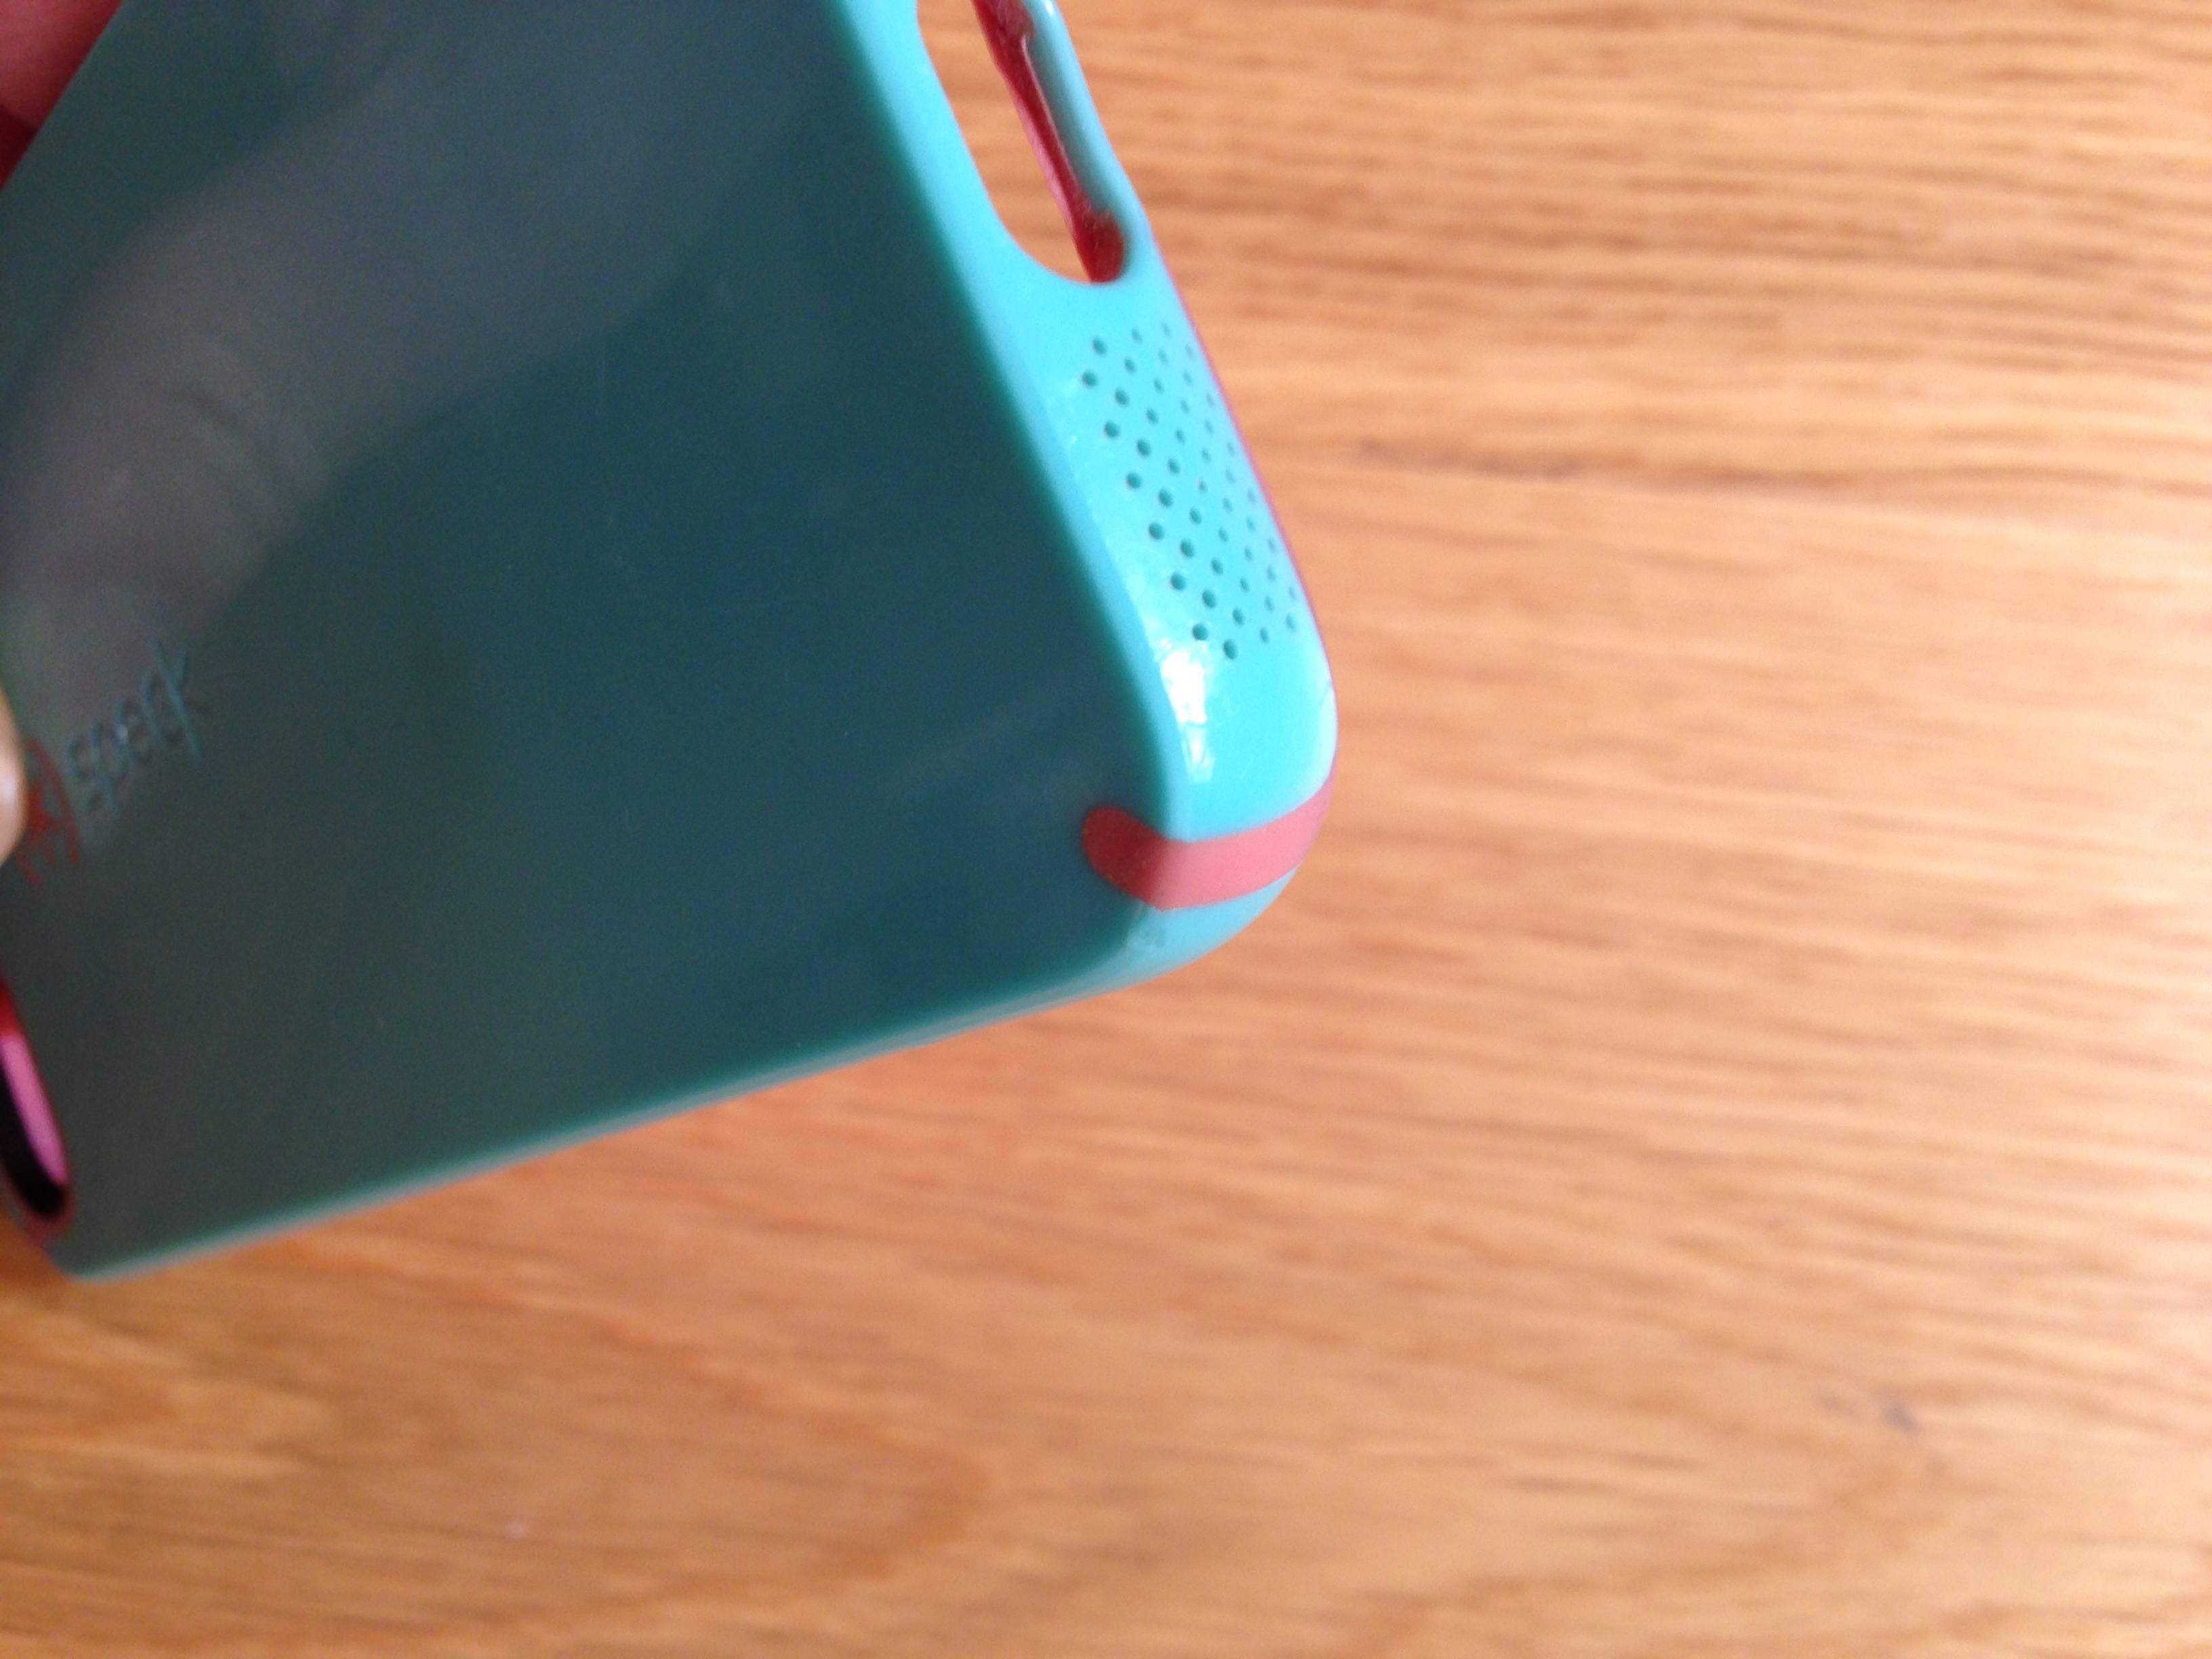 iphone 5 Speck case cover, the myndset digital marketing